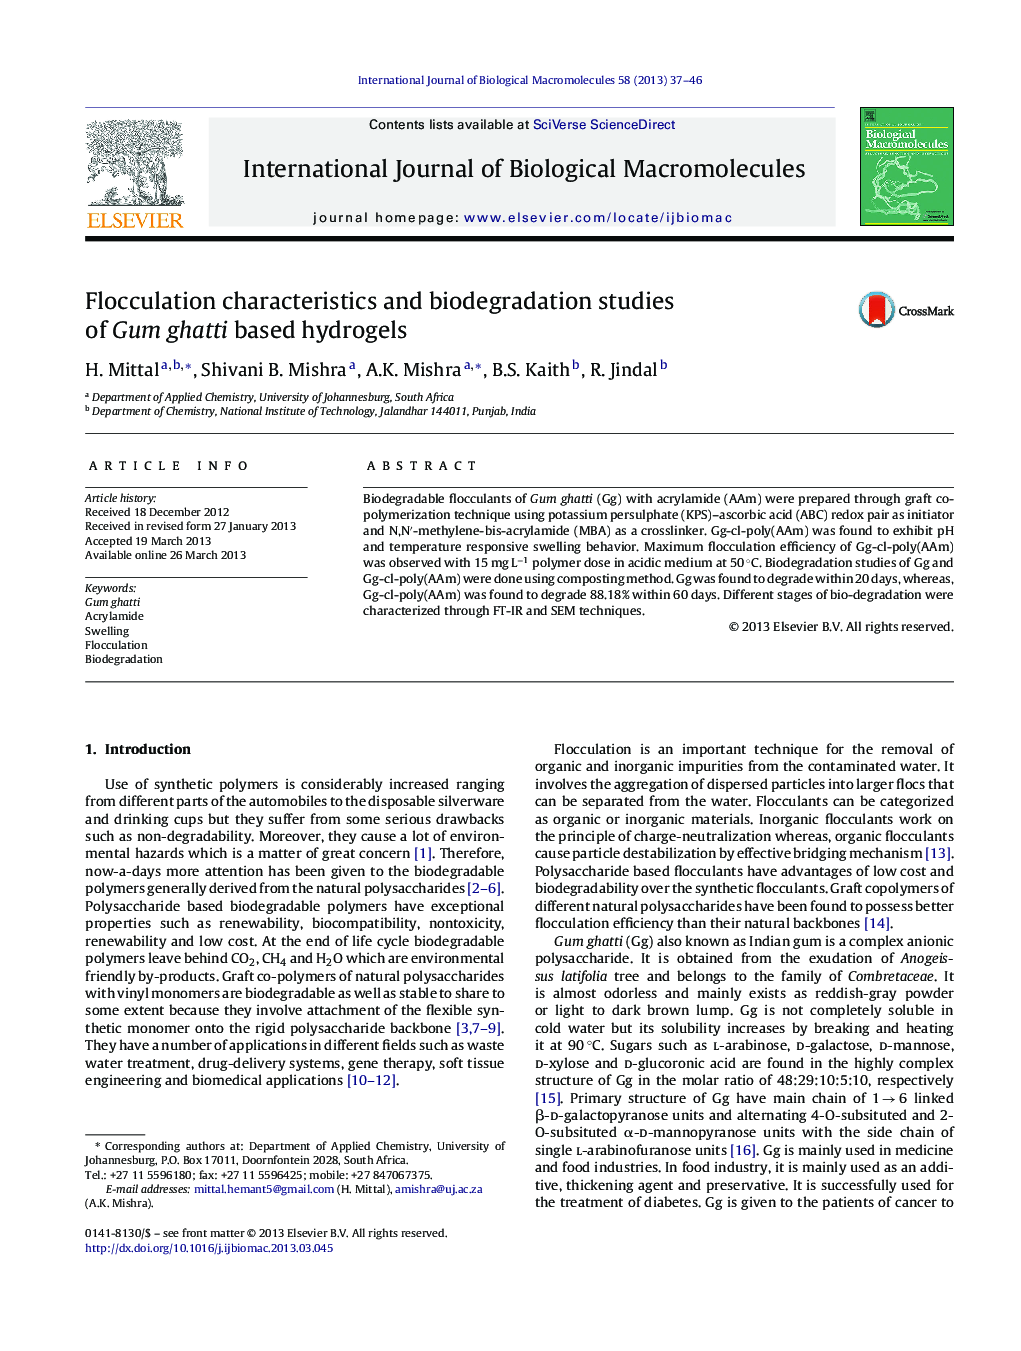 Flocculation characteristics and biodegradation studies of Gum ghatti based hydrogels